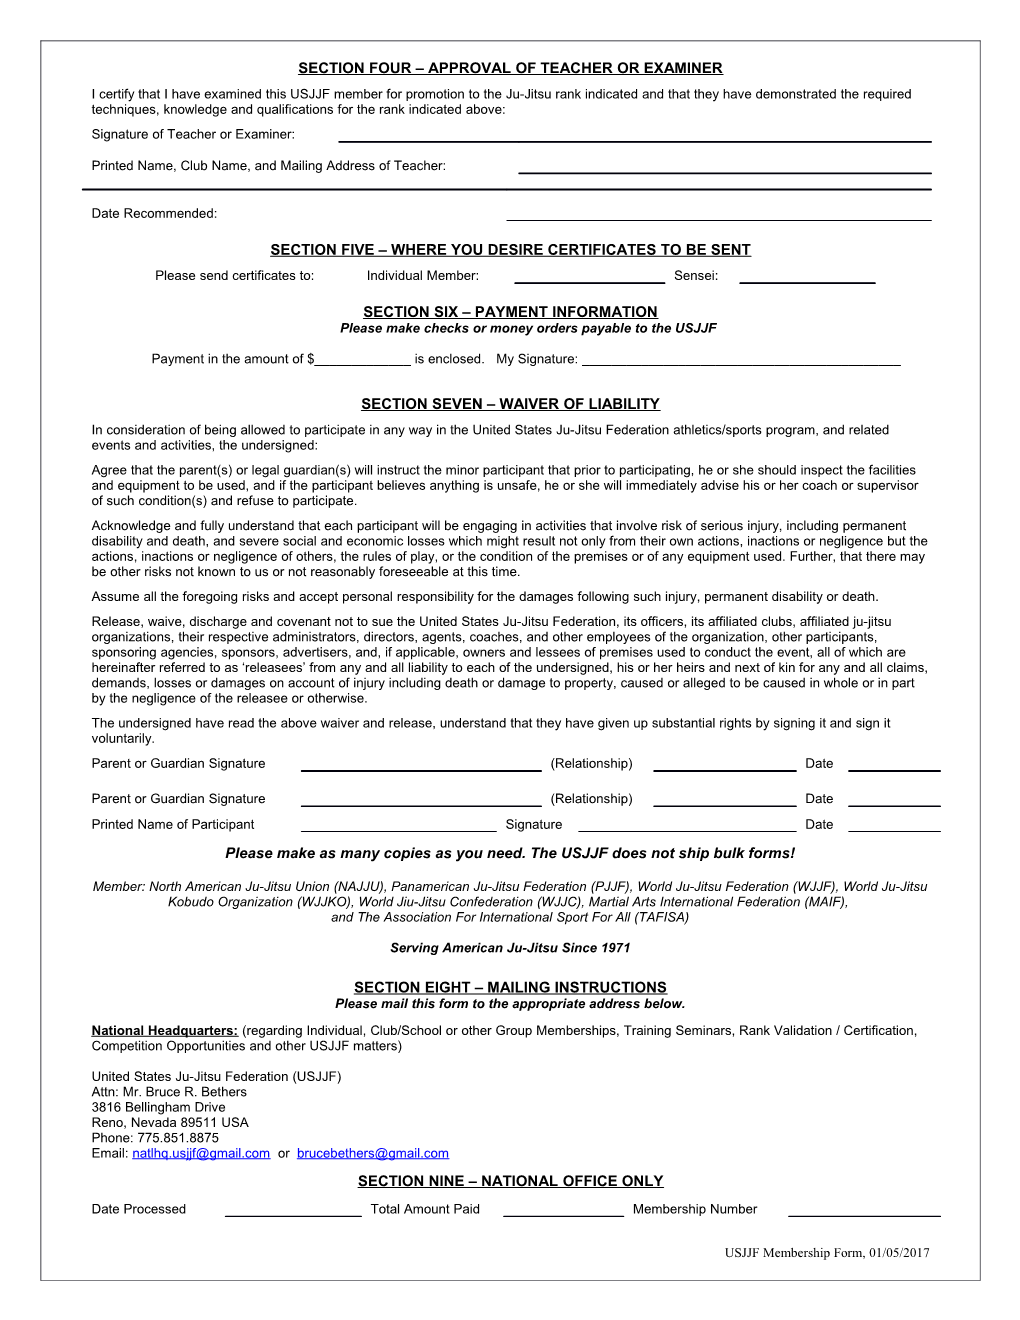 USMA Life Membership, Promotion, Insurance, and Seminar Registration Form